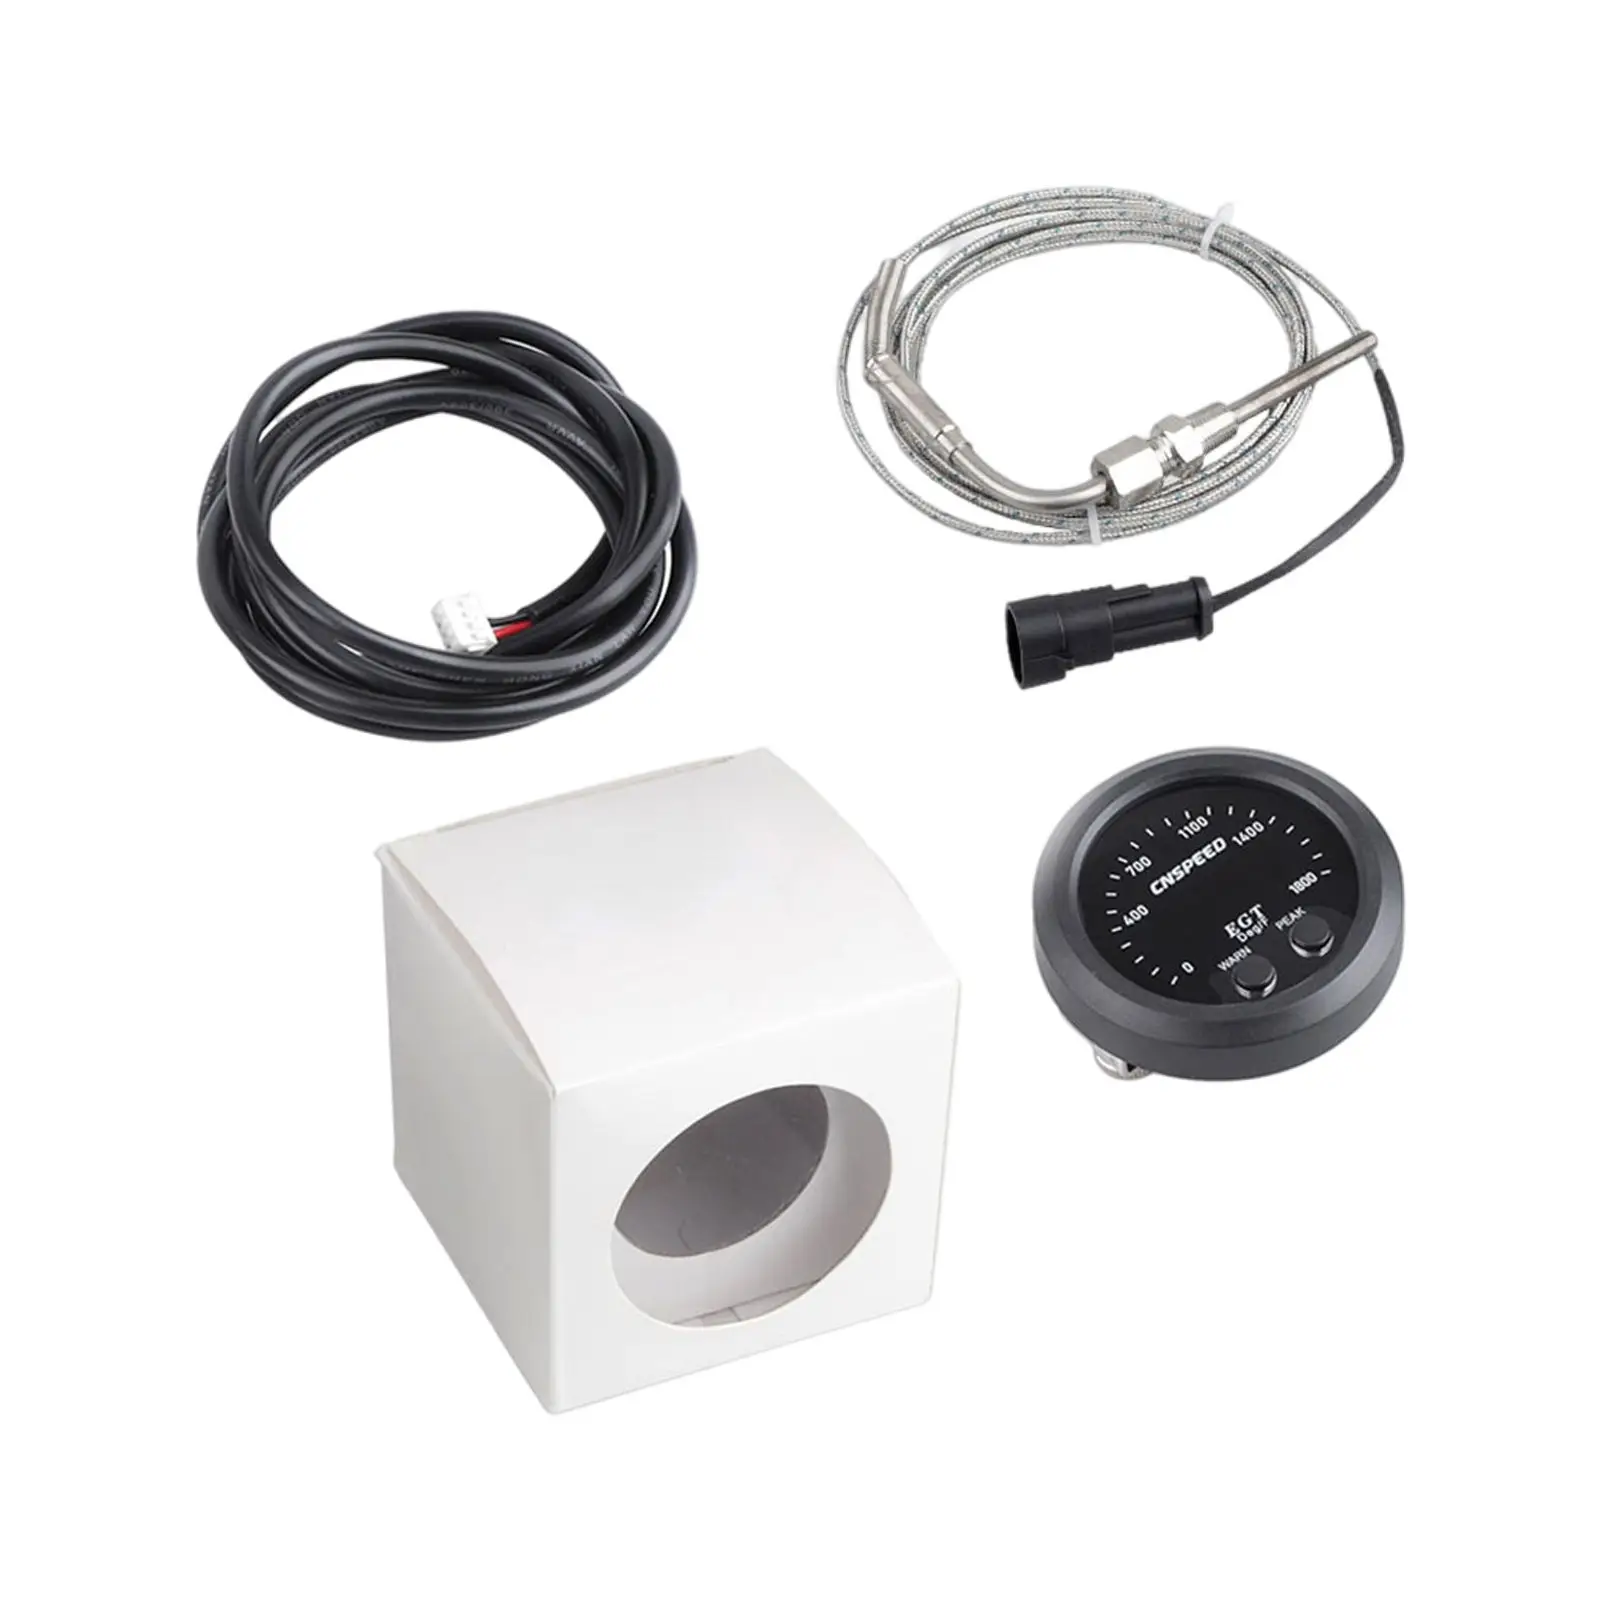 Exhaust Gas Temperature Gauge Kit Black Dial 1800 F Pyrometer Thin Temperature Meter Temp Gauge for Oil Transmission Temp